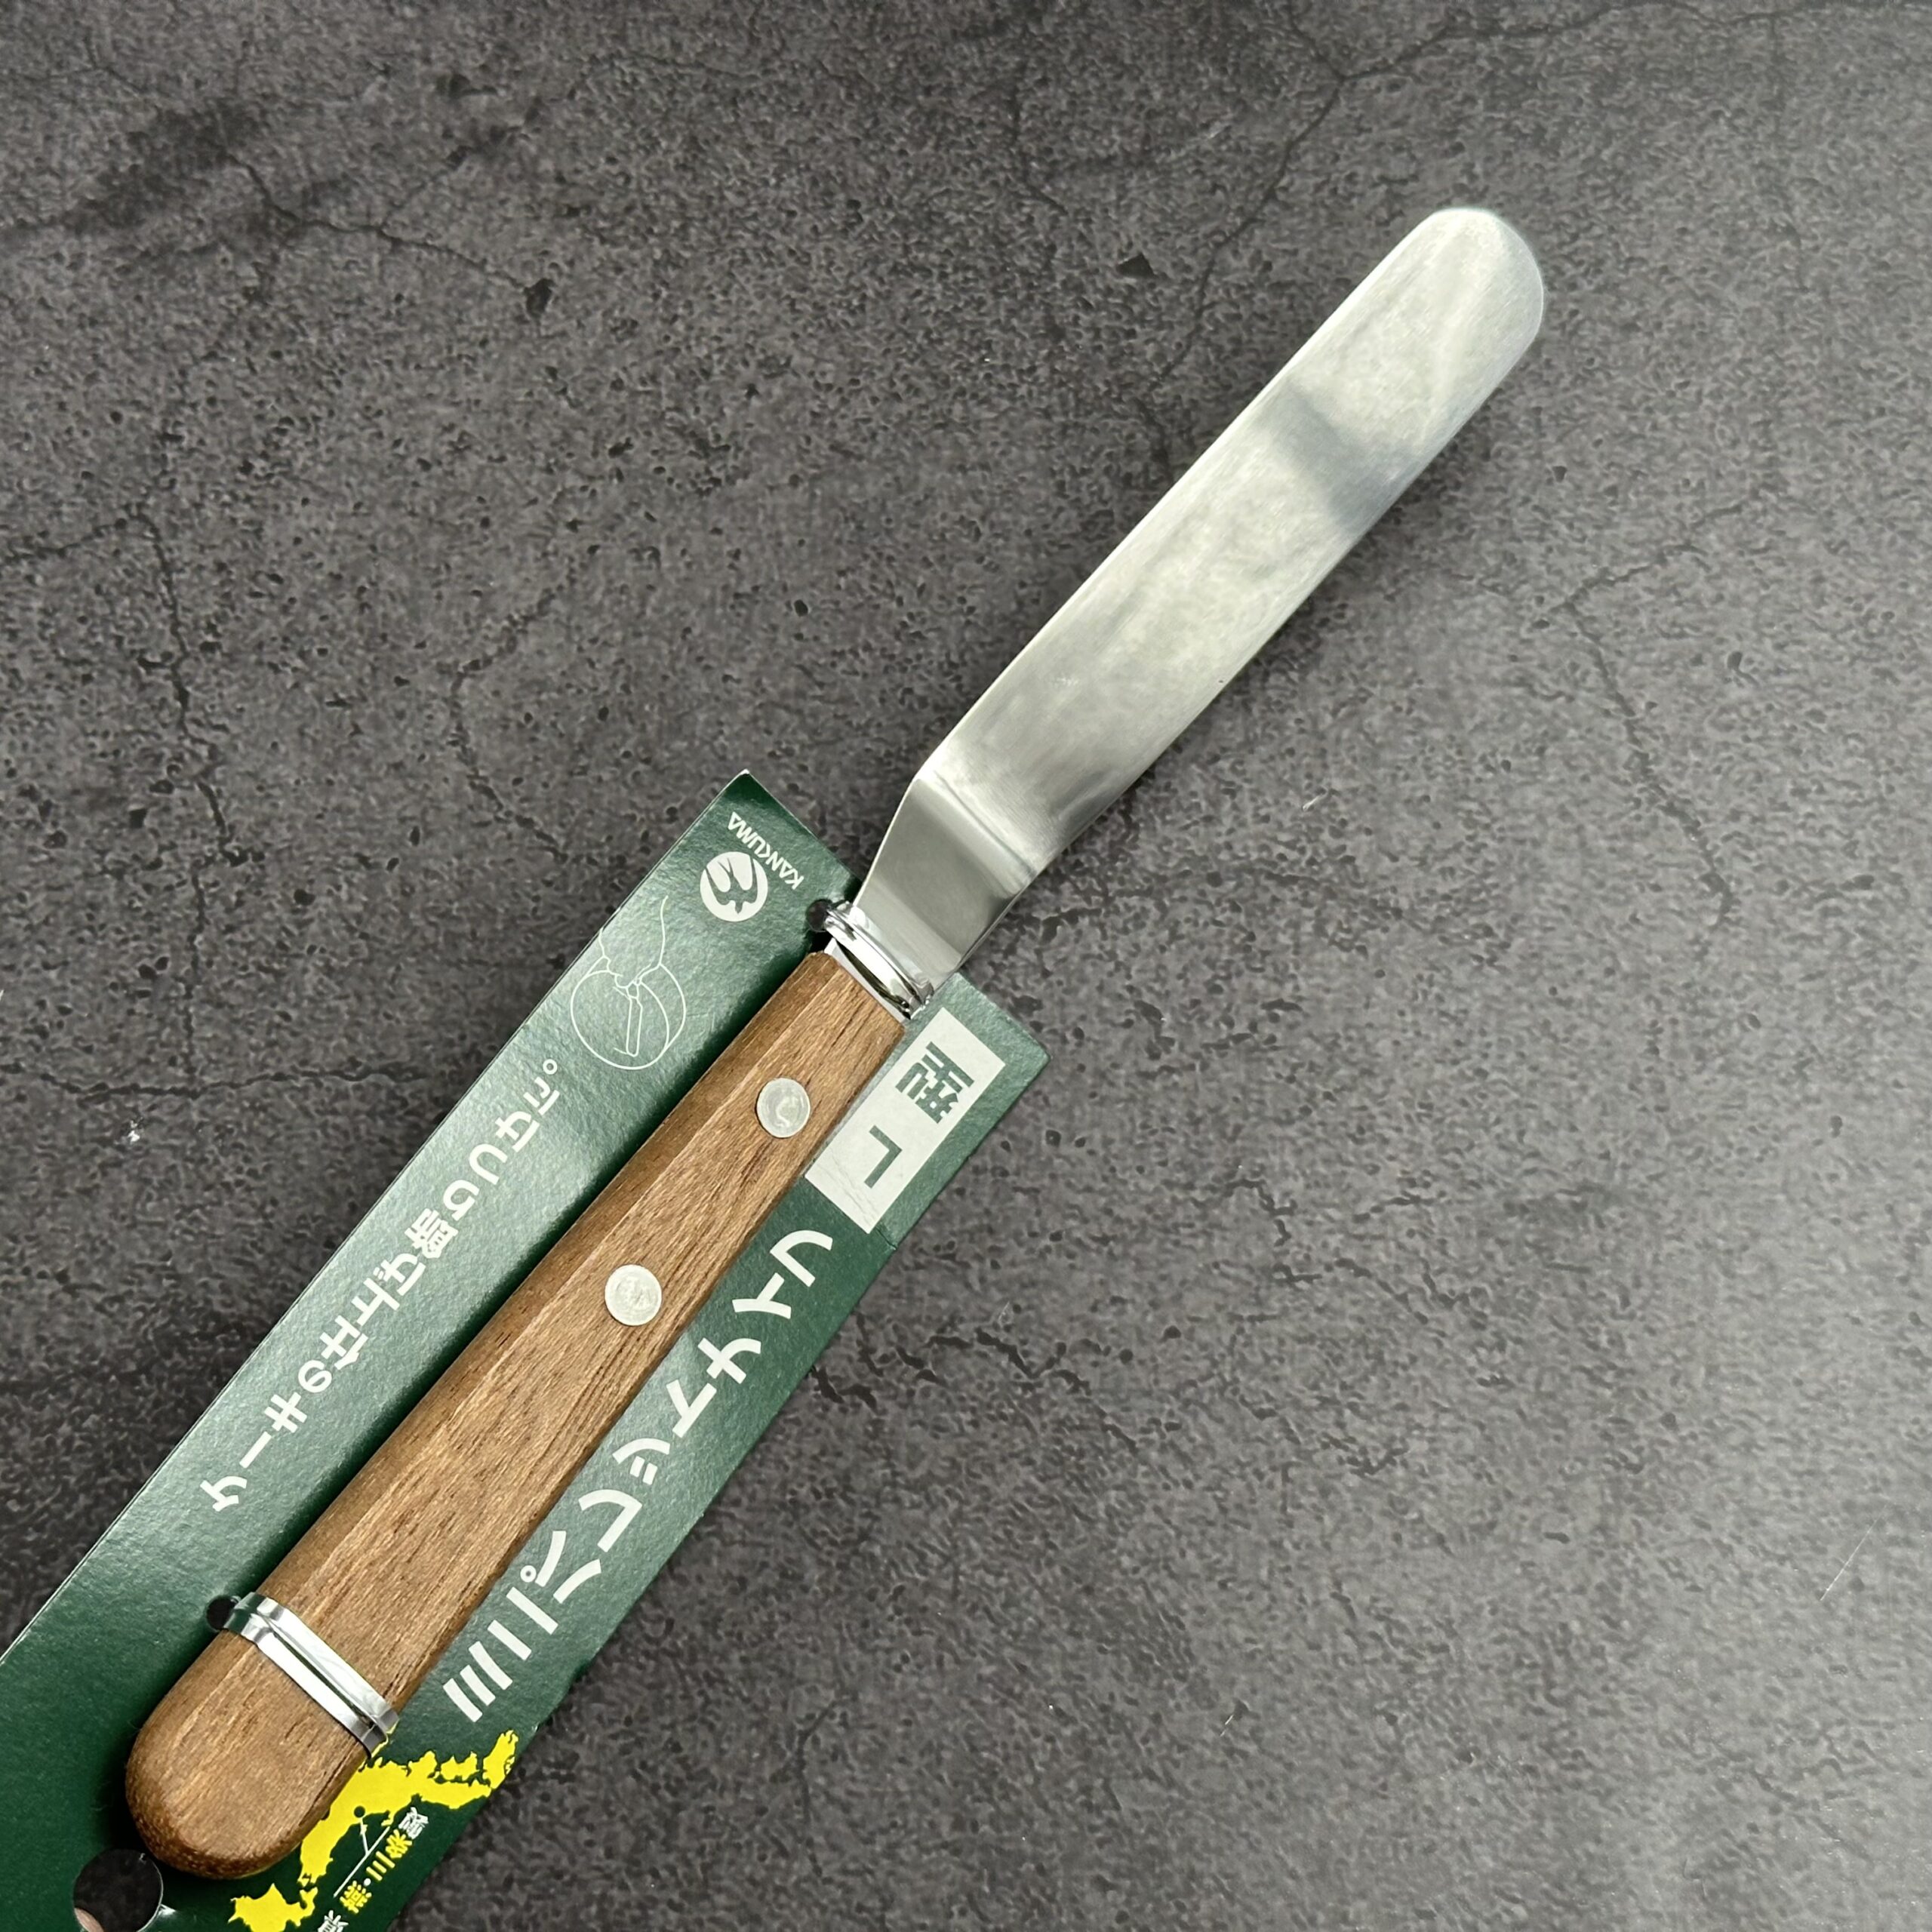 Kanda OFFSET L-Shaped Spatula Palette Knife